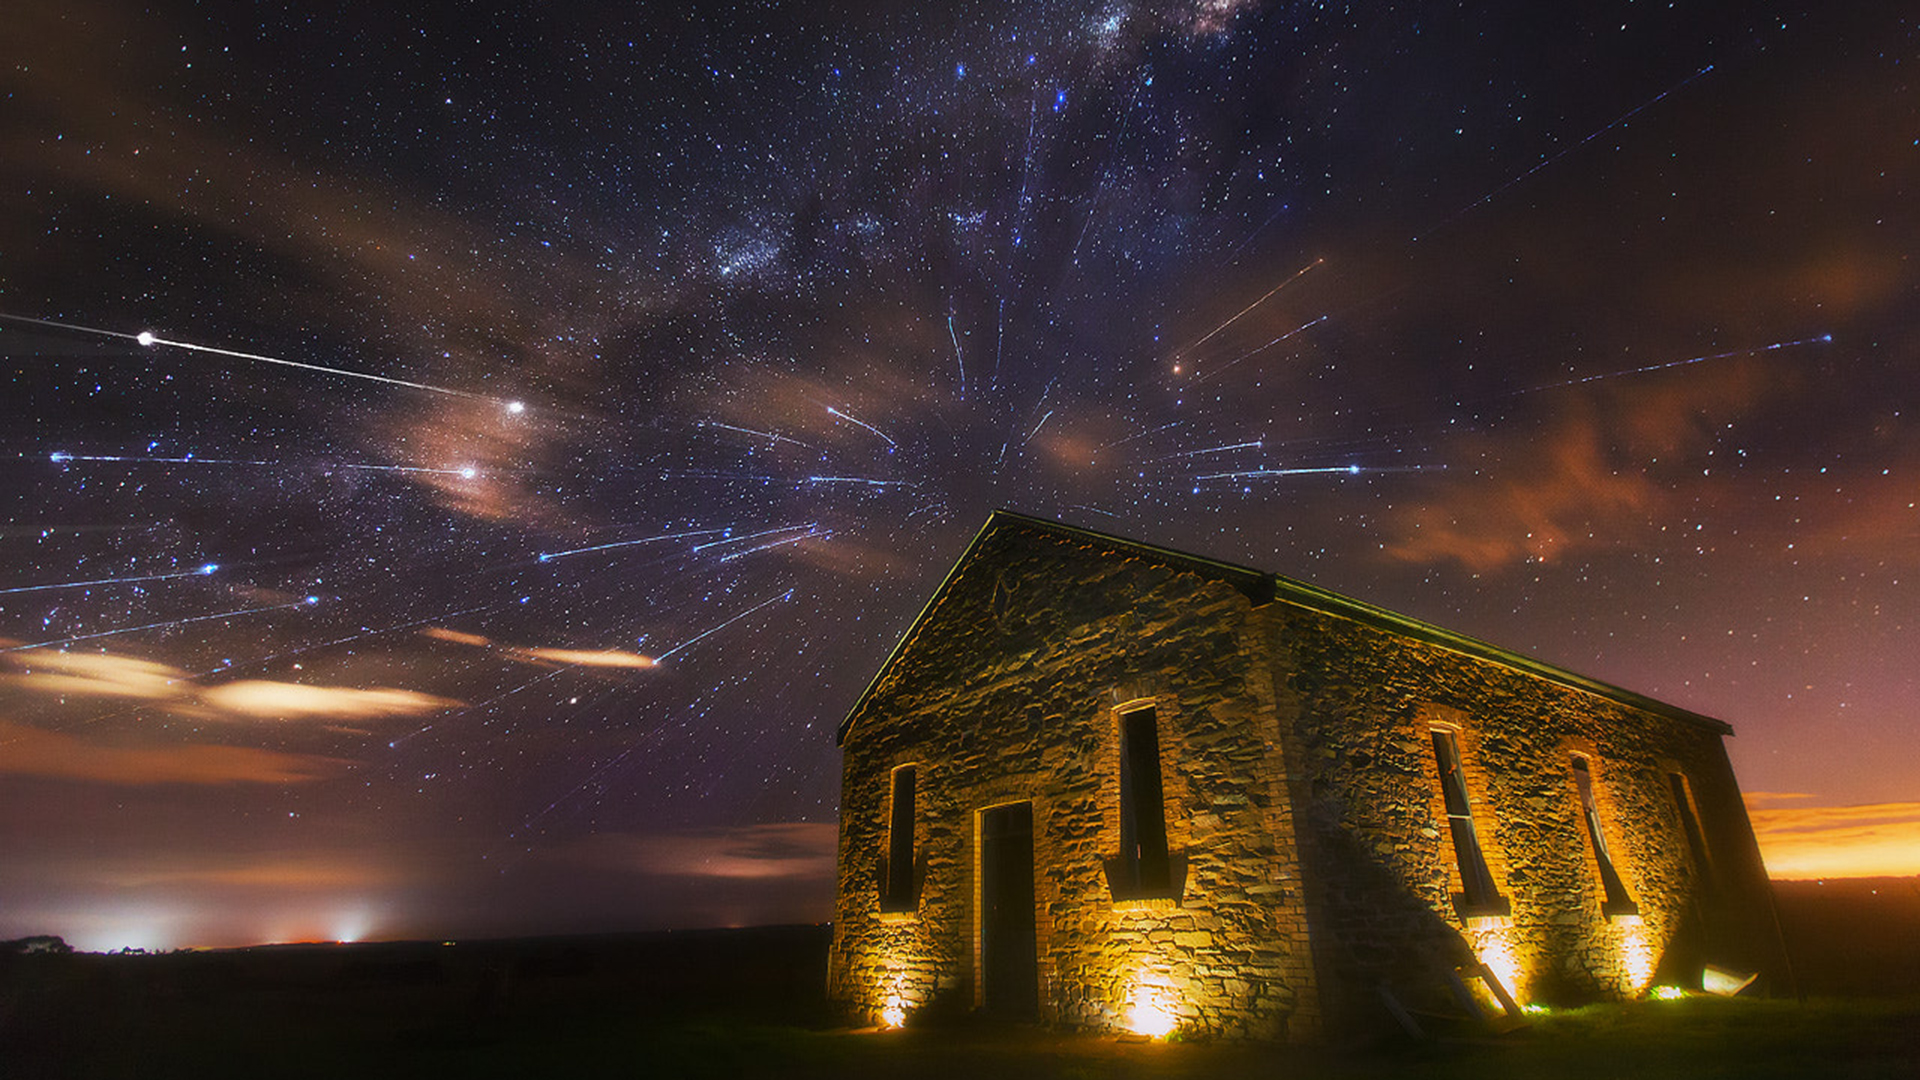  meteor inspire shower photos 